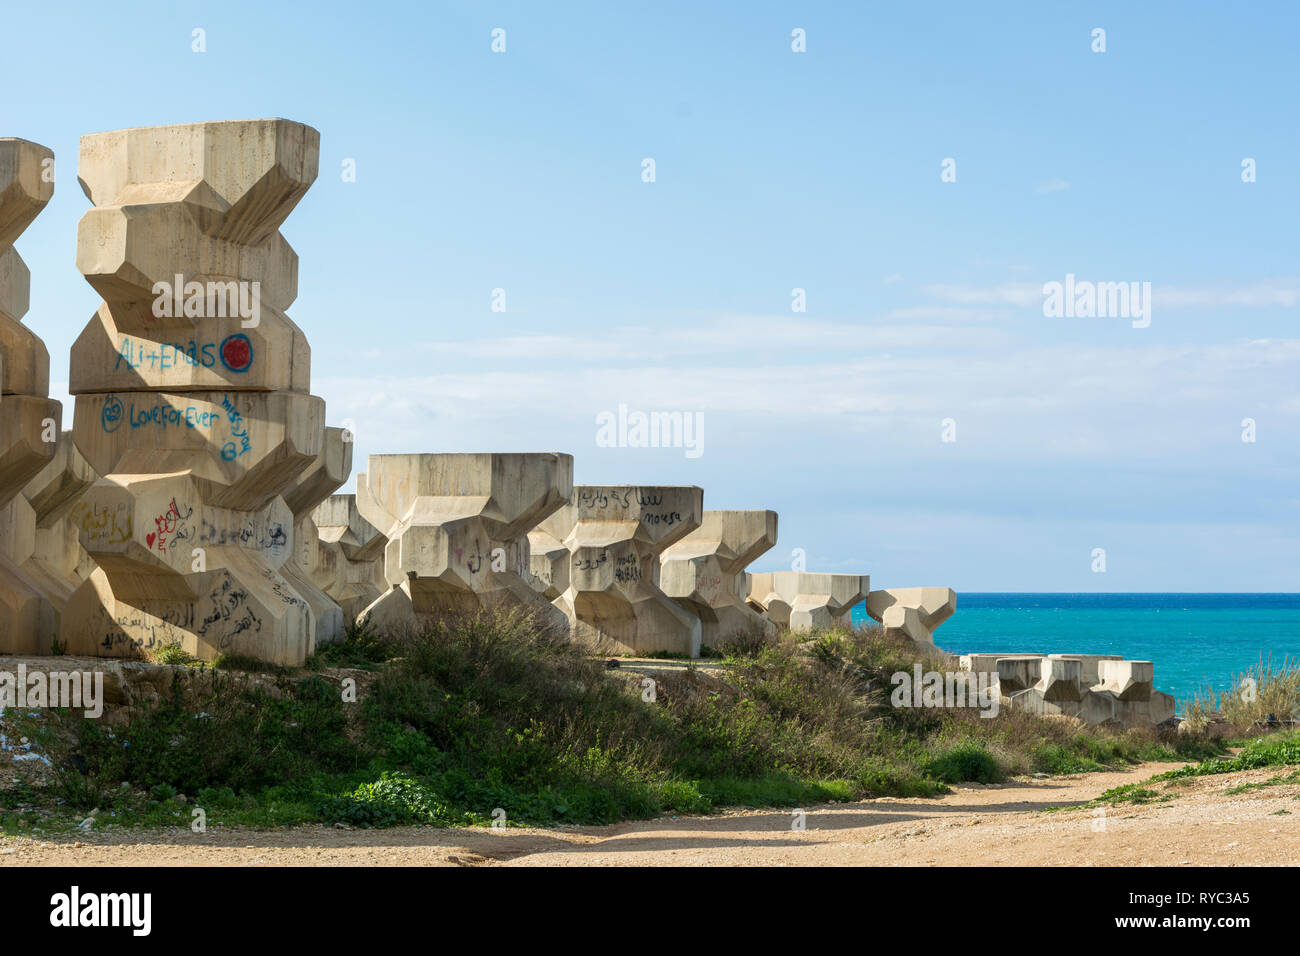 Wellenbrecher betonsteine am Strand Beirut Libanon Naher Osten Stockfoto